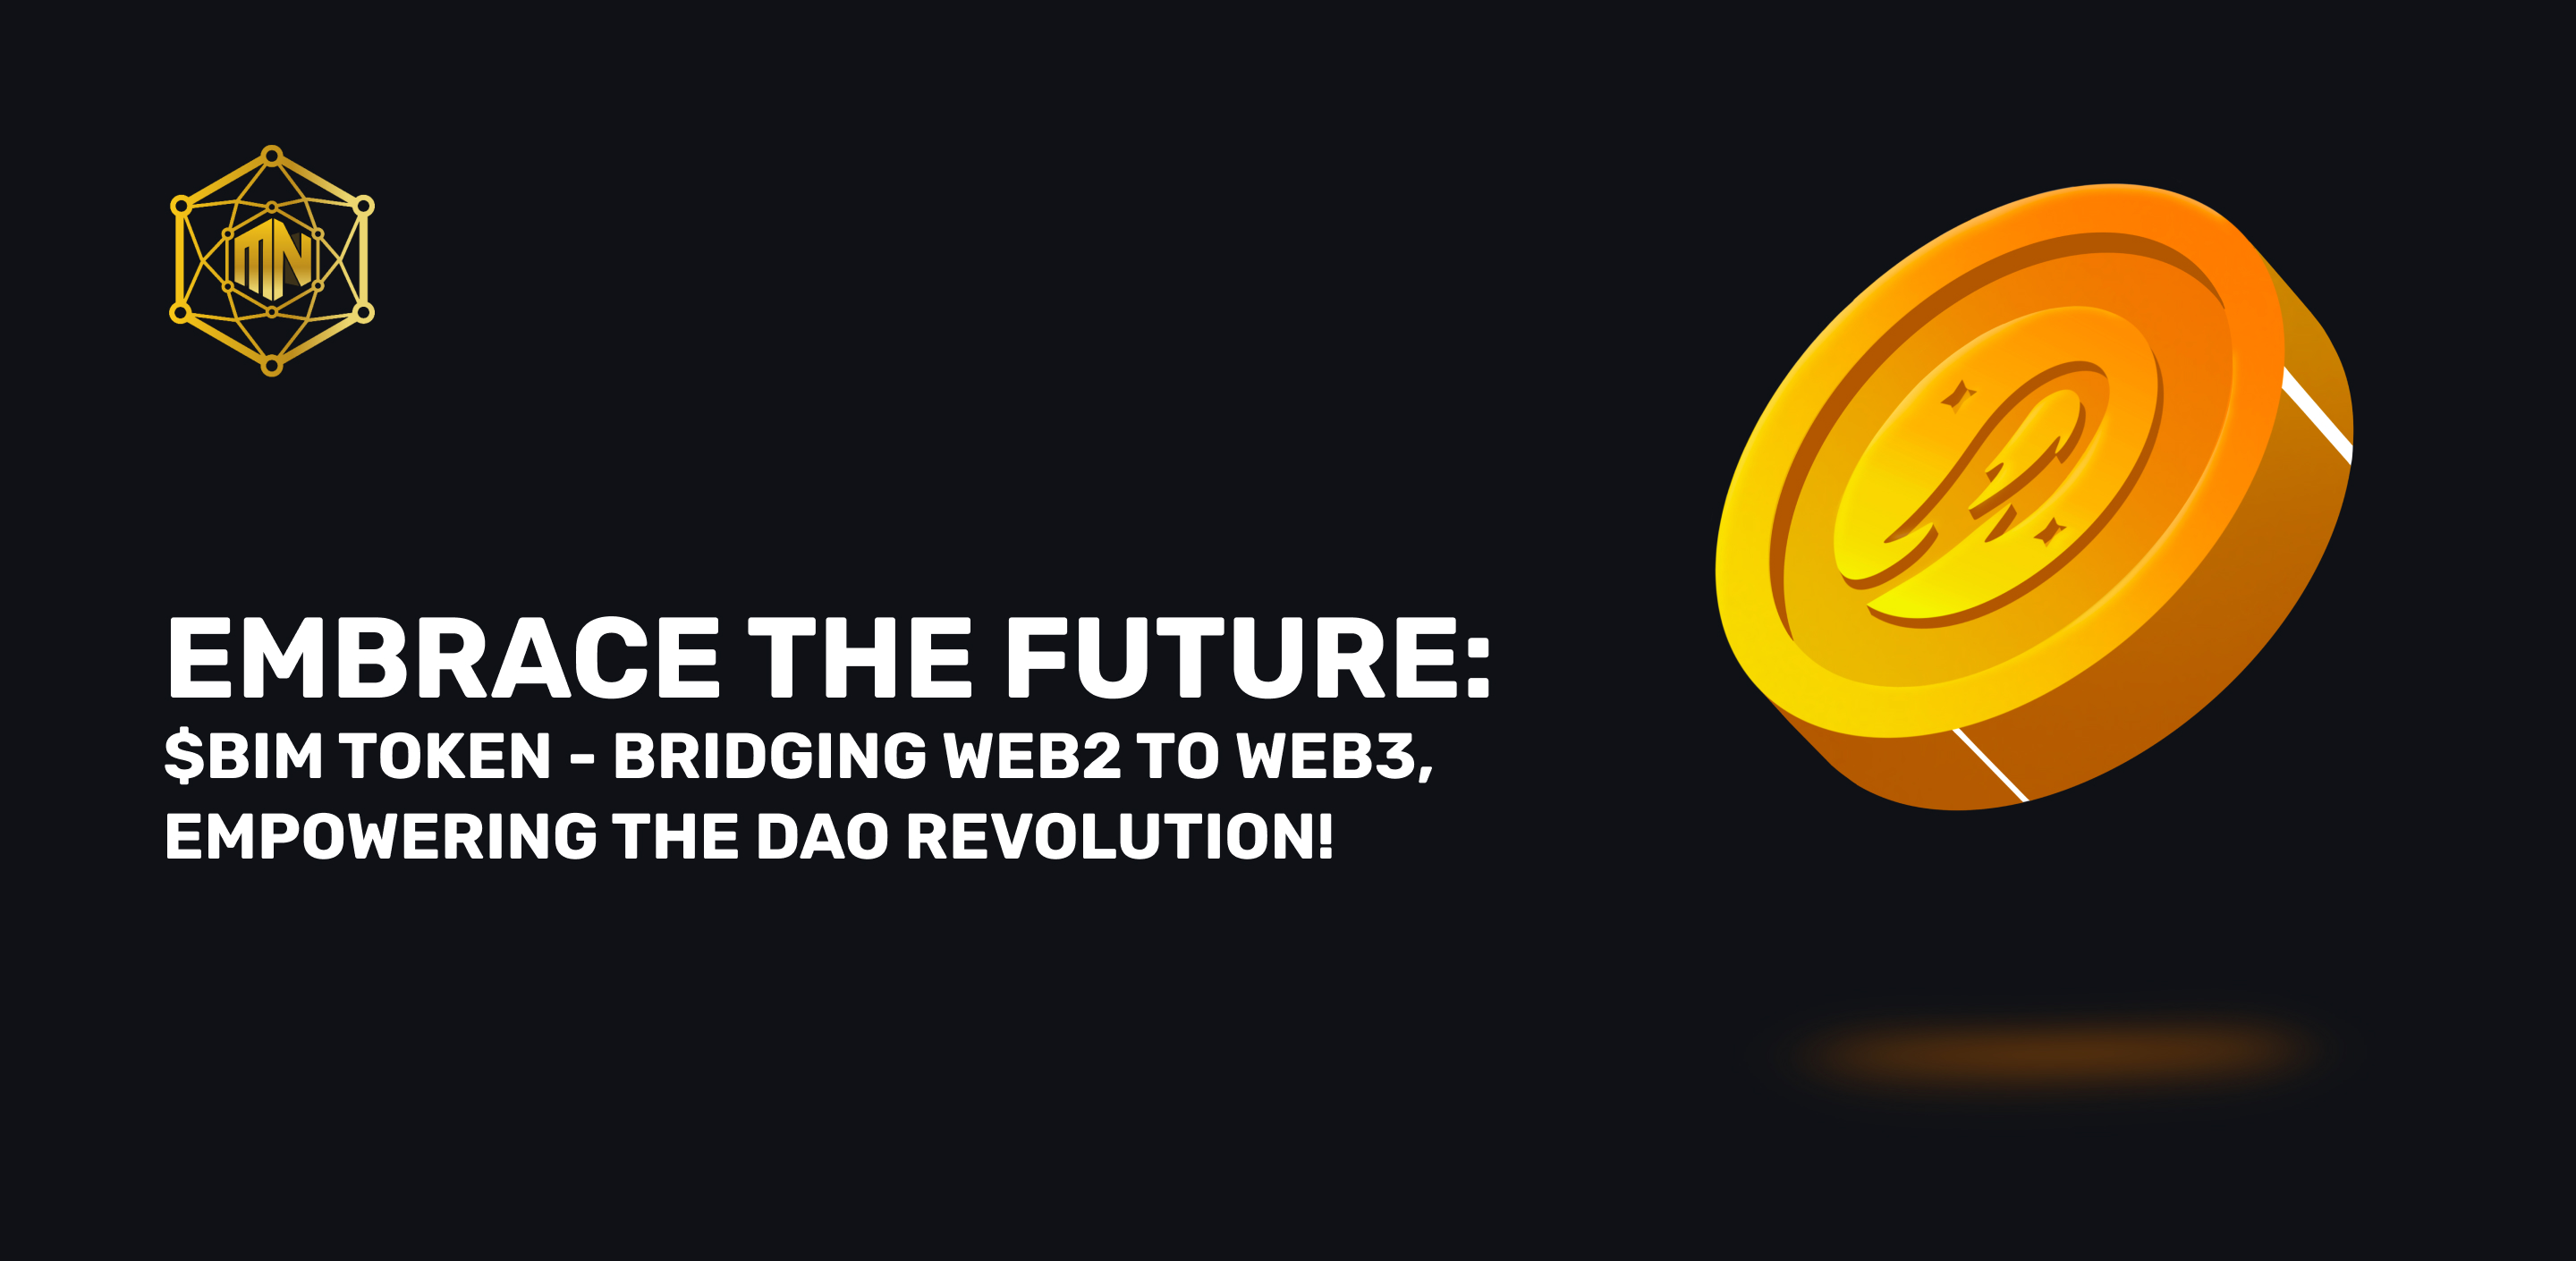 $BIM Token - Bridging Web2 to Web3, Empowering the DAO Revolution!